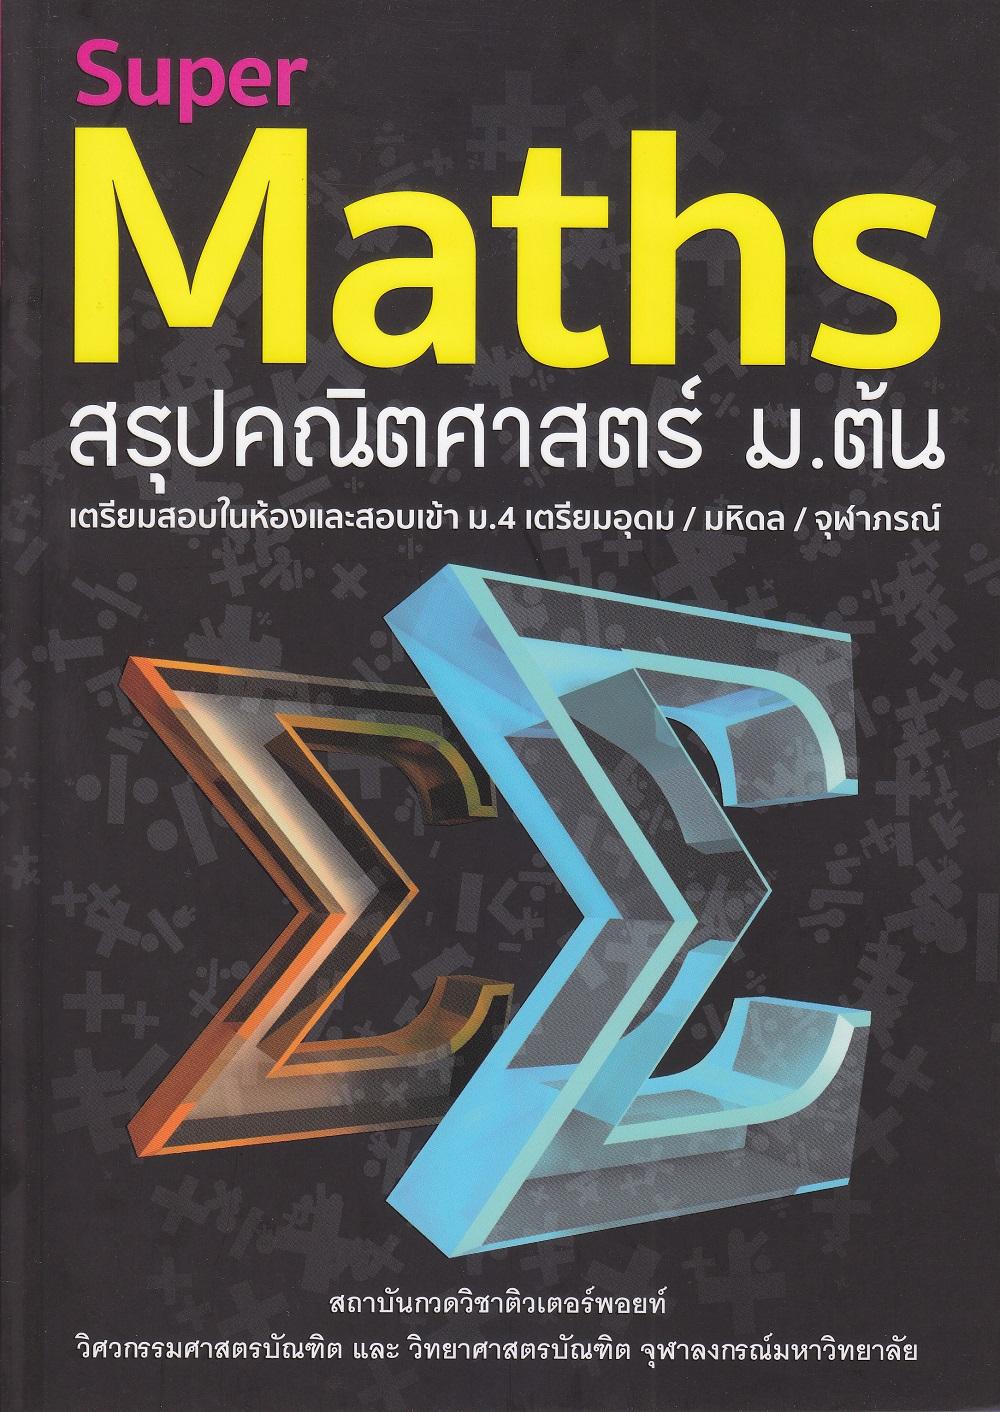 Super Maths สรุปคณิตศาสตร์ ม.ต้น